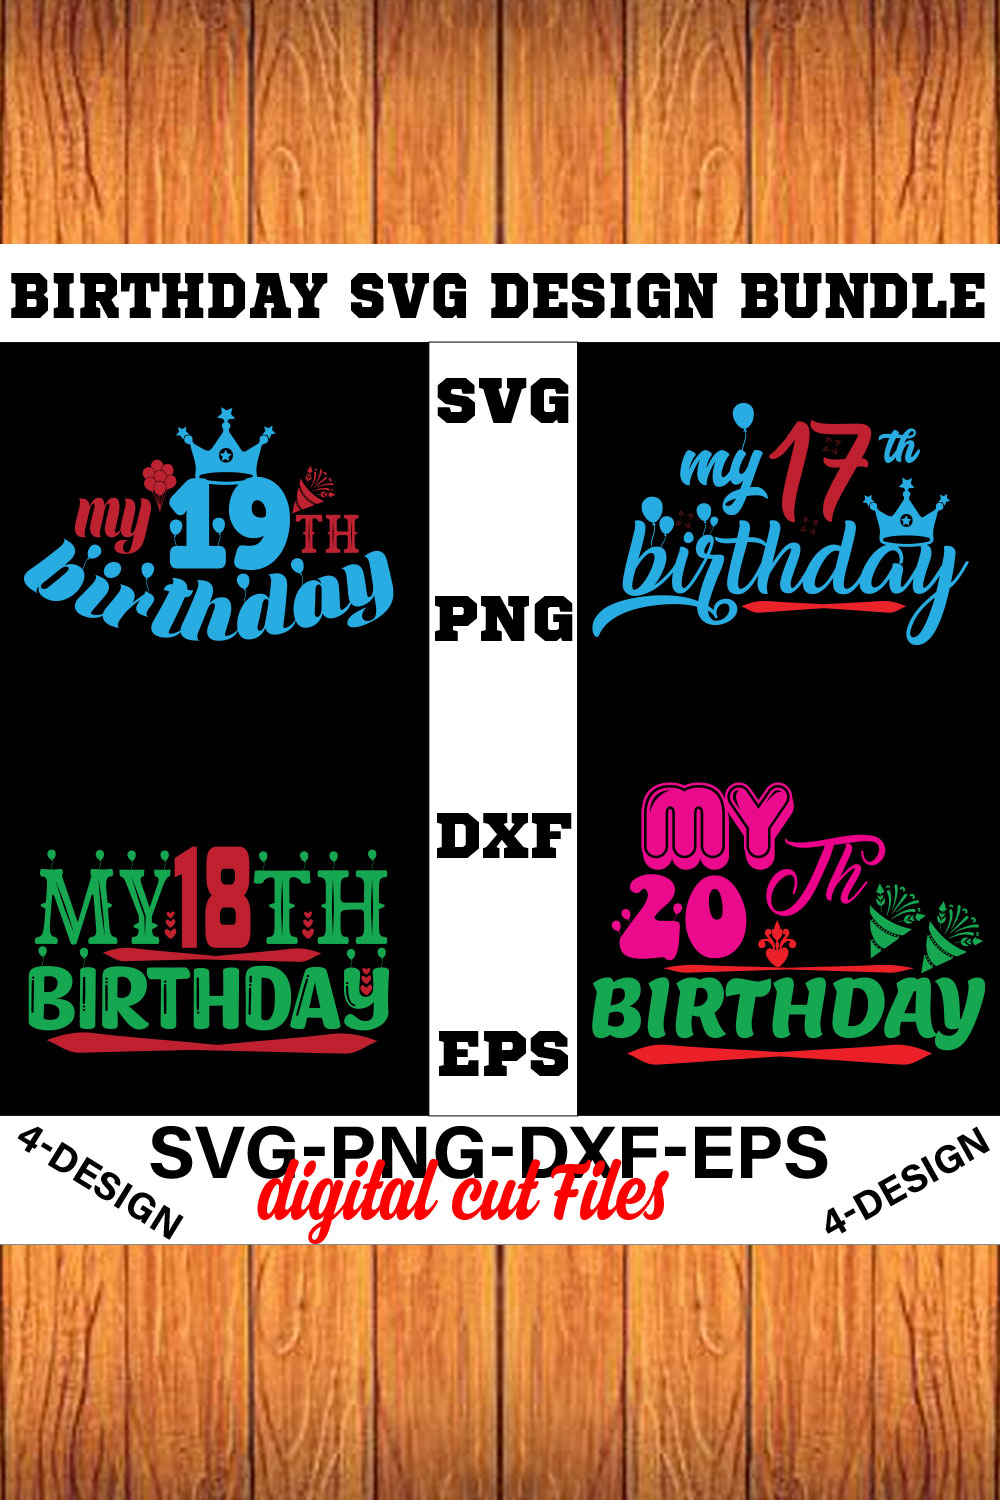 birthday svg design bundle Happy birthday svg bundle hand lettered birthday svg birthday party svg Volume-21 pinterest preview image.